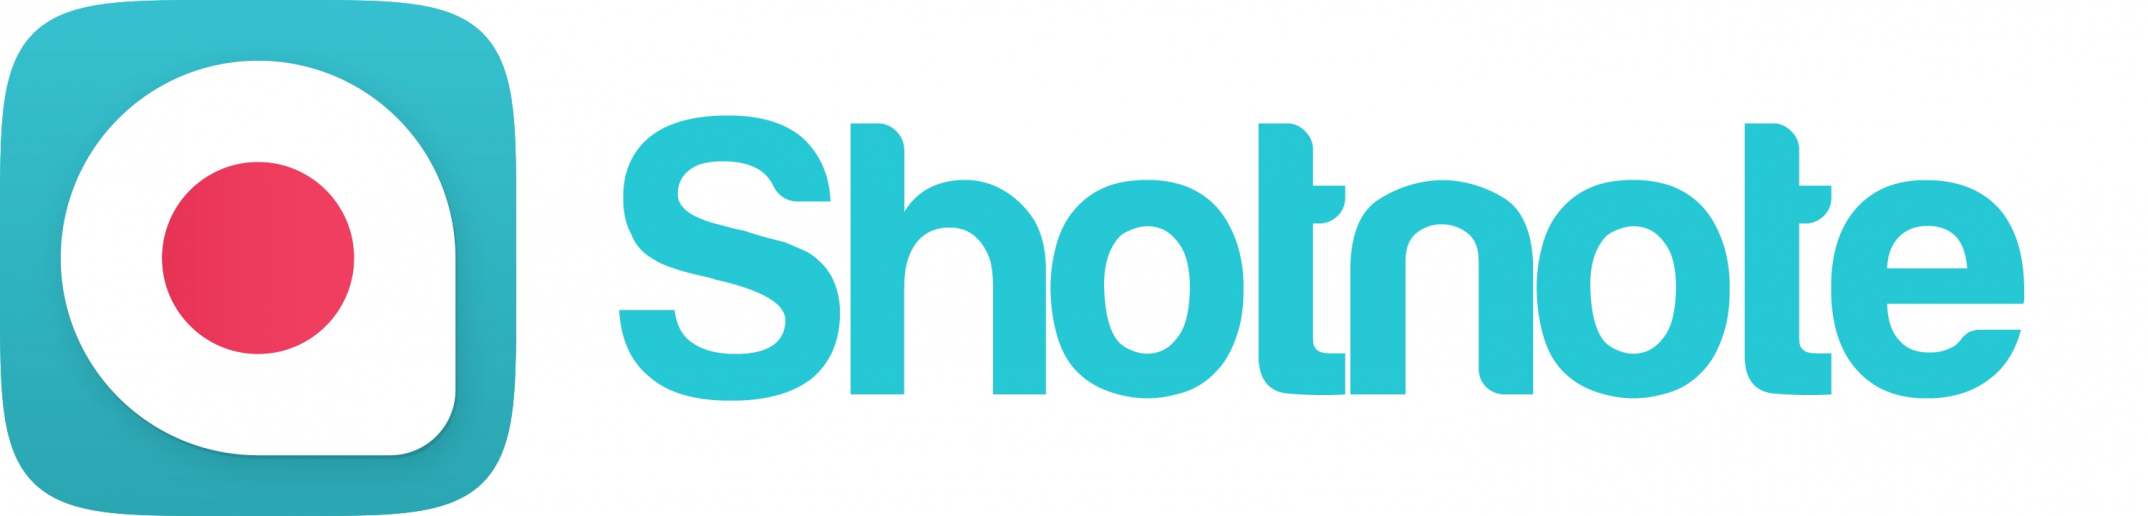 Shotnote Logo